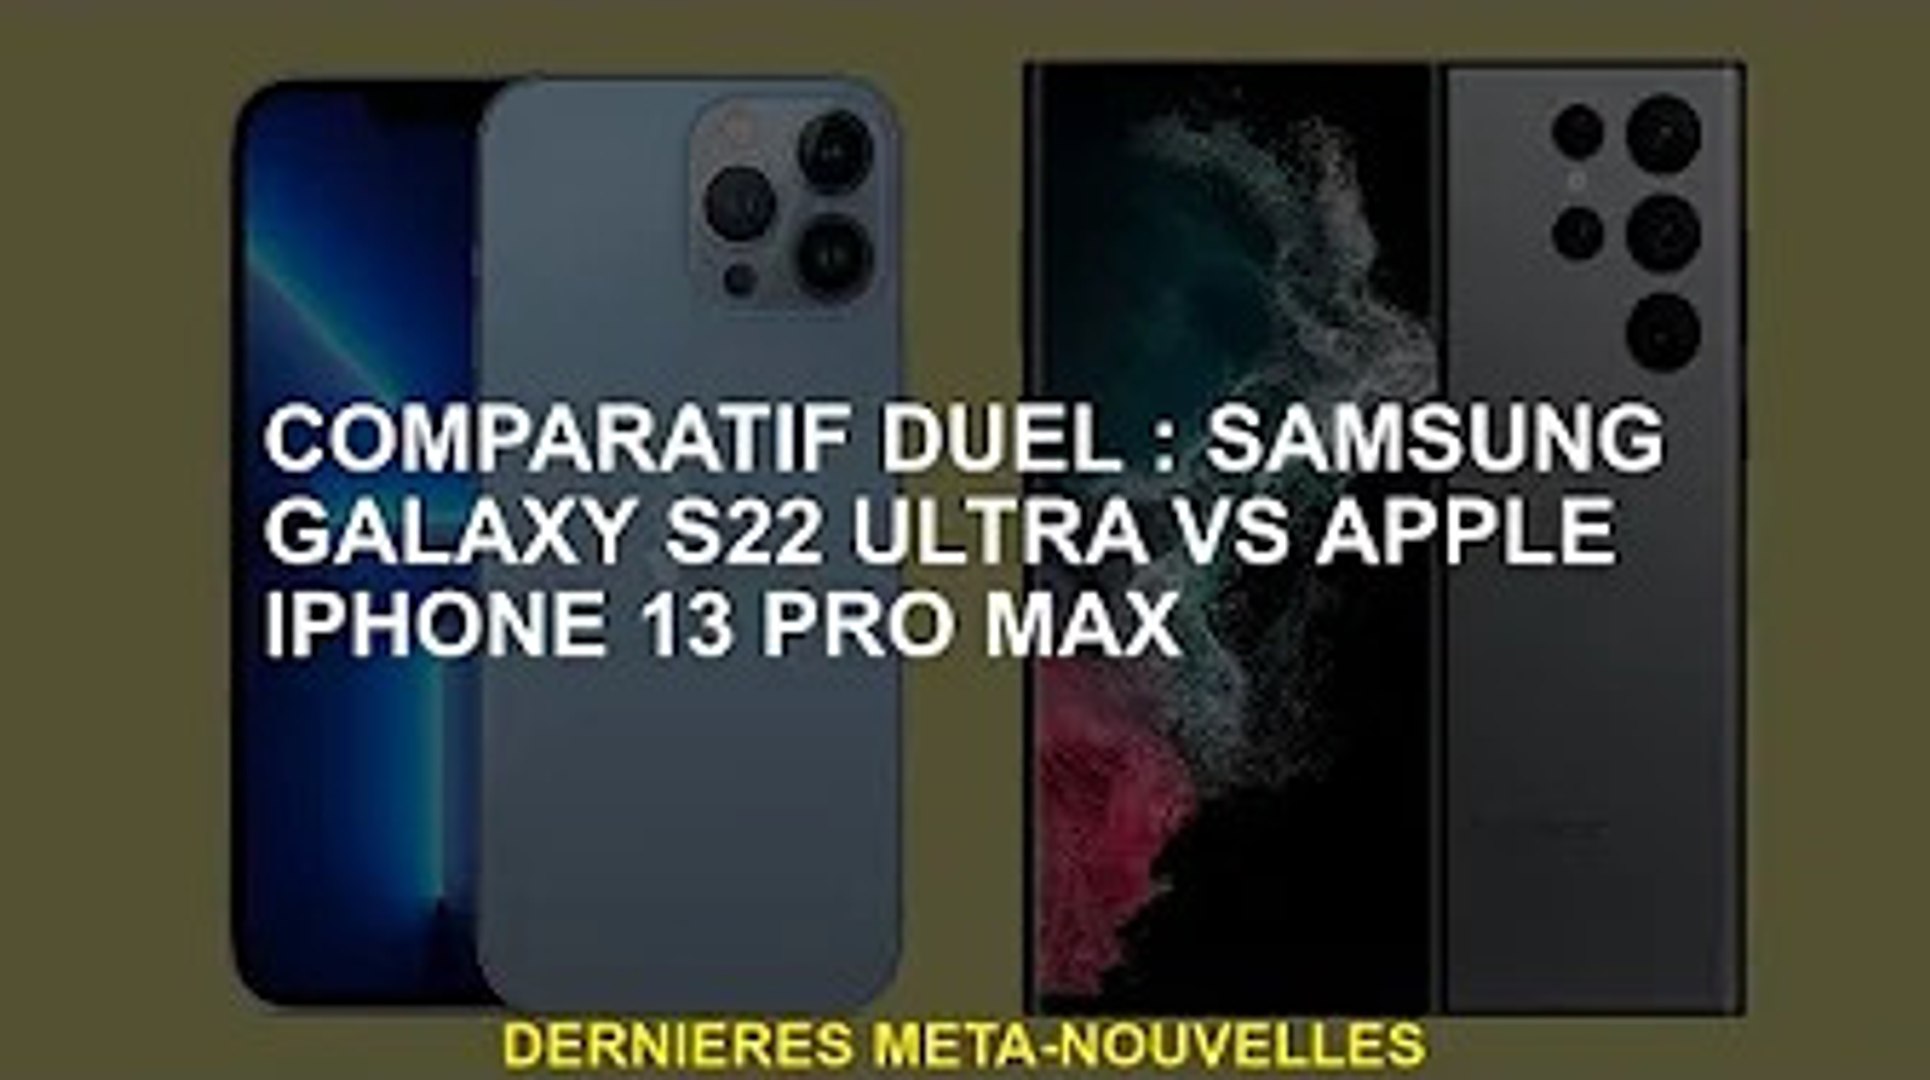 Comparaison duel : Samsung Galaxy S22 Ultra contre Apple iPhone 13 Pro Max  - Vidéo Dailymotion